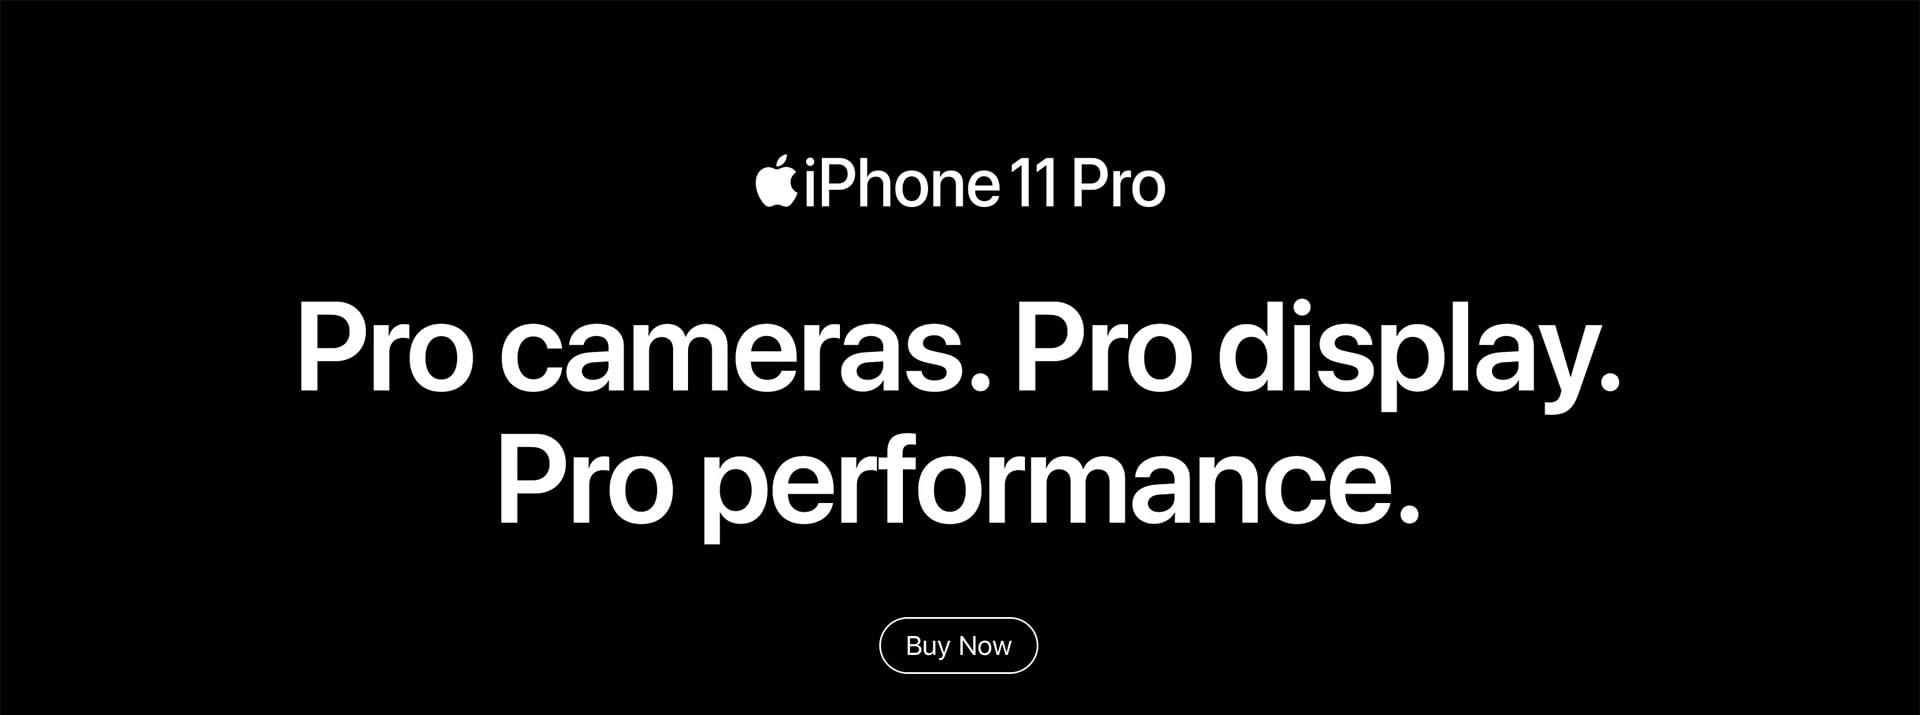 apple-iphone11-pro-max-price-etisalat-uae-overview-1